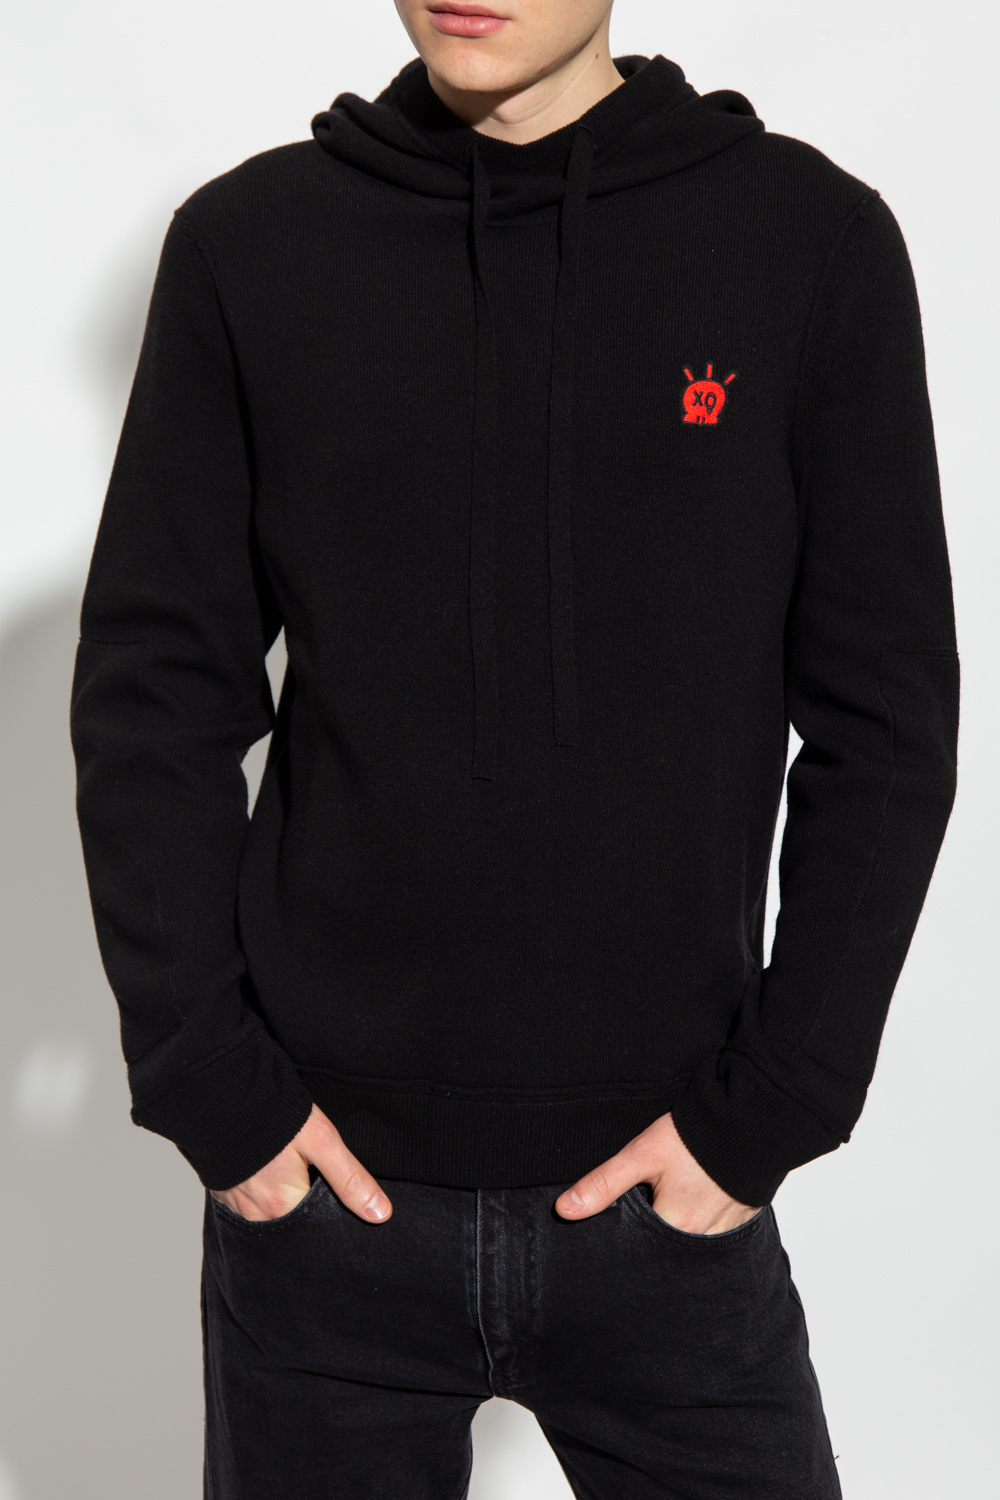 Carhartt WIP Script t-shirt in black ‘Hewitt’ hooded sweater